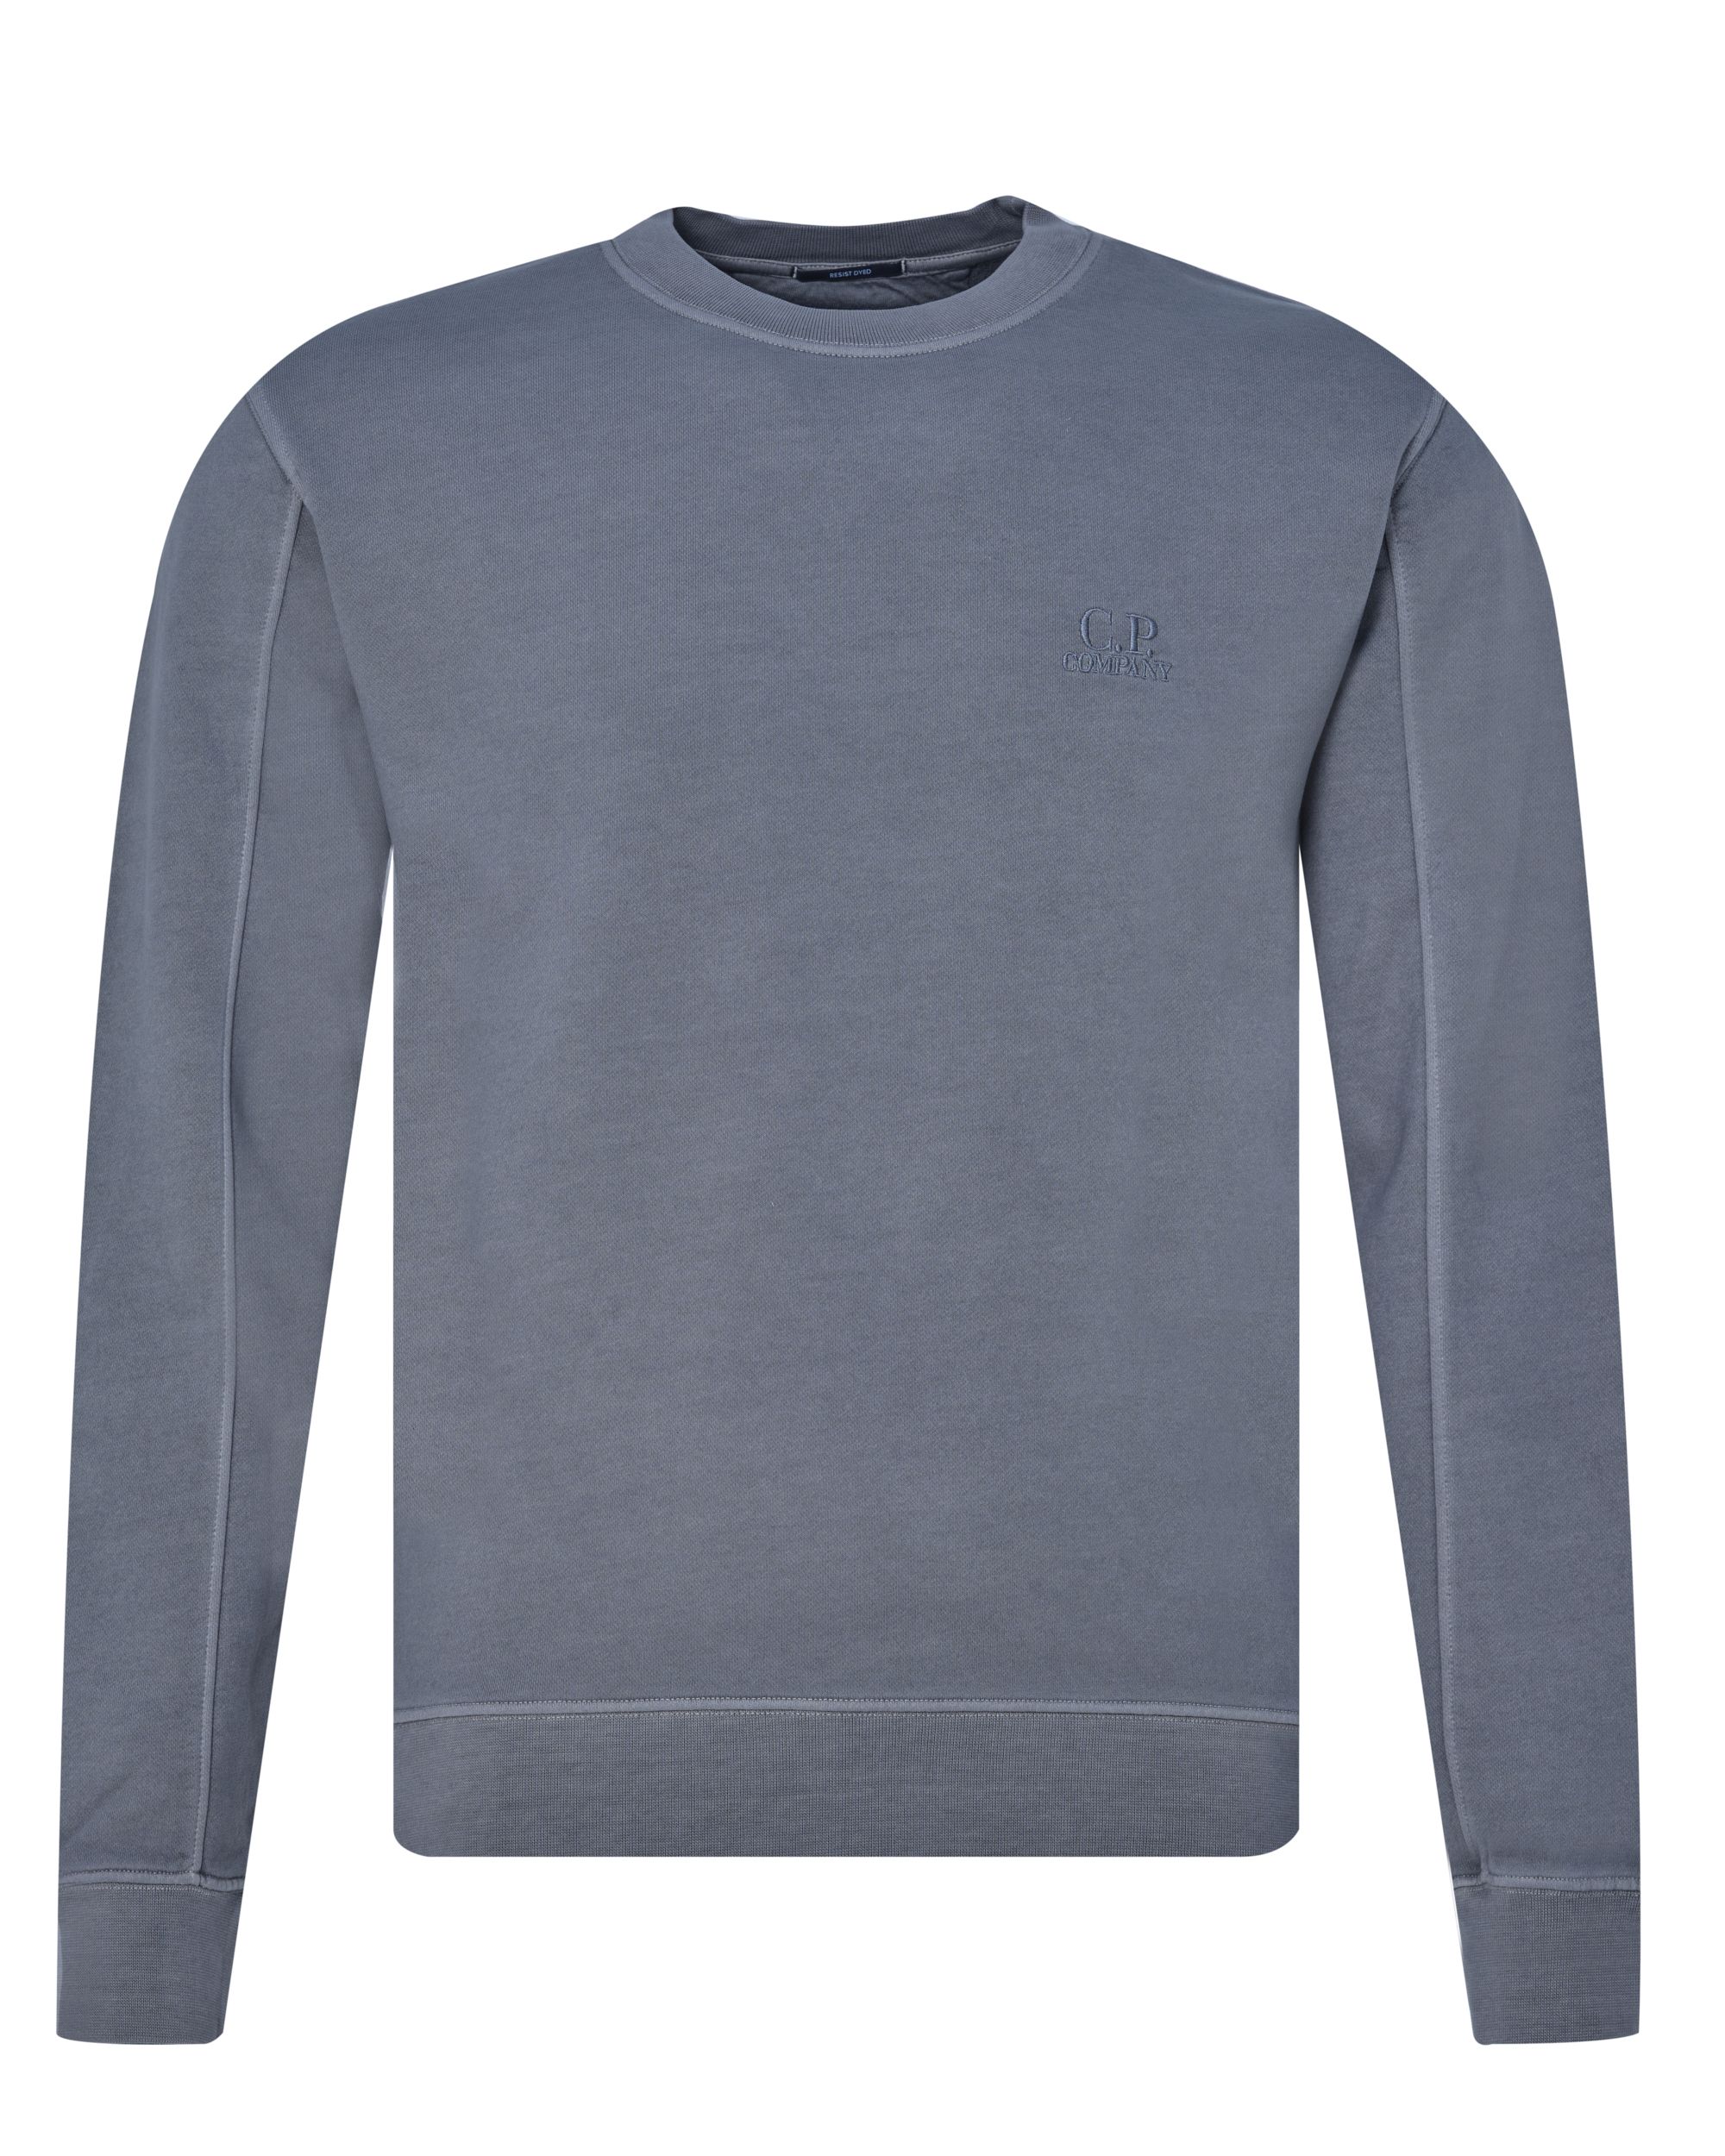 C.P Company Sweater Grijs 078735-002-L